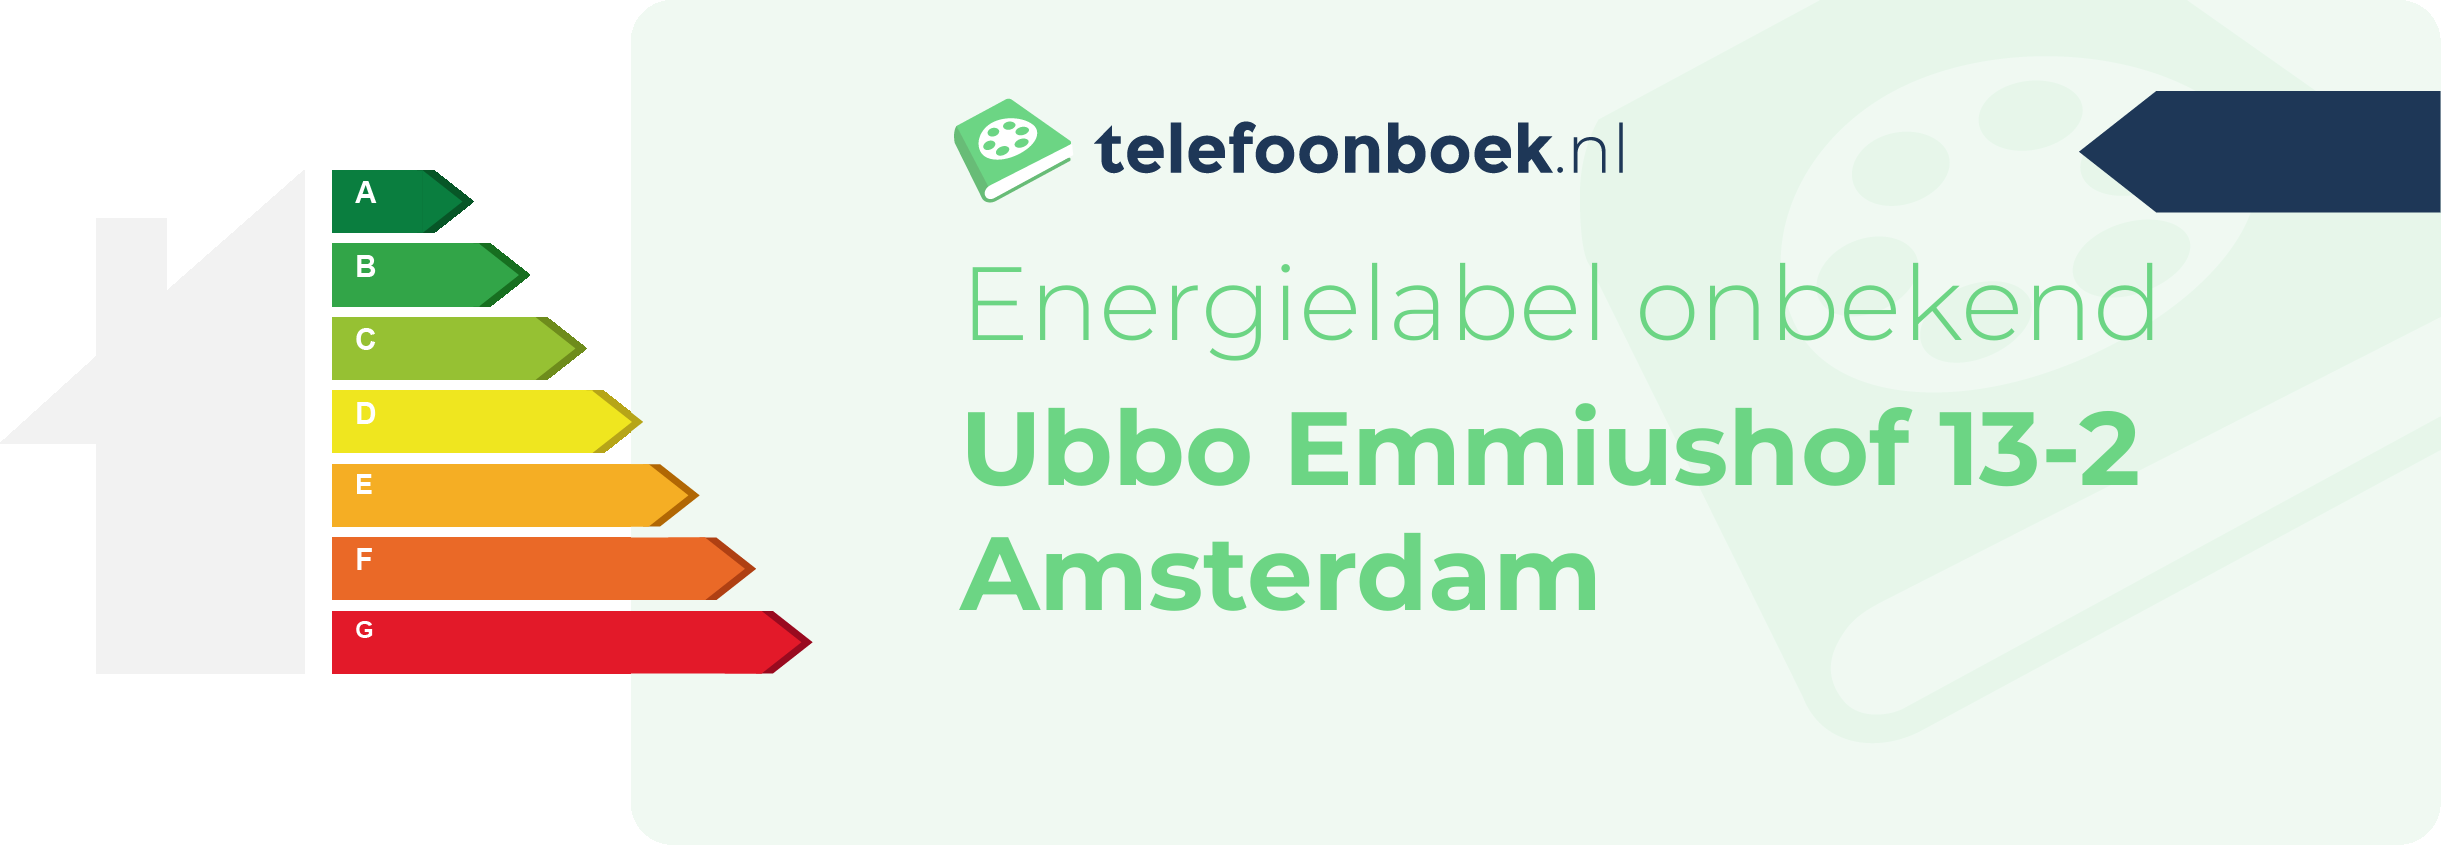 Energielabel Ubbo Emmiushof 13-2 Amsterdam